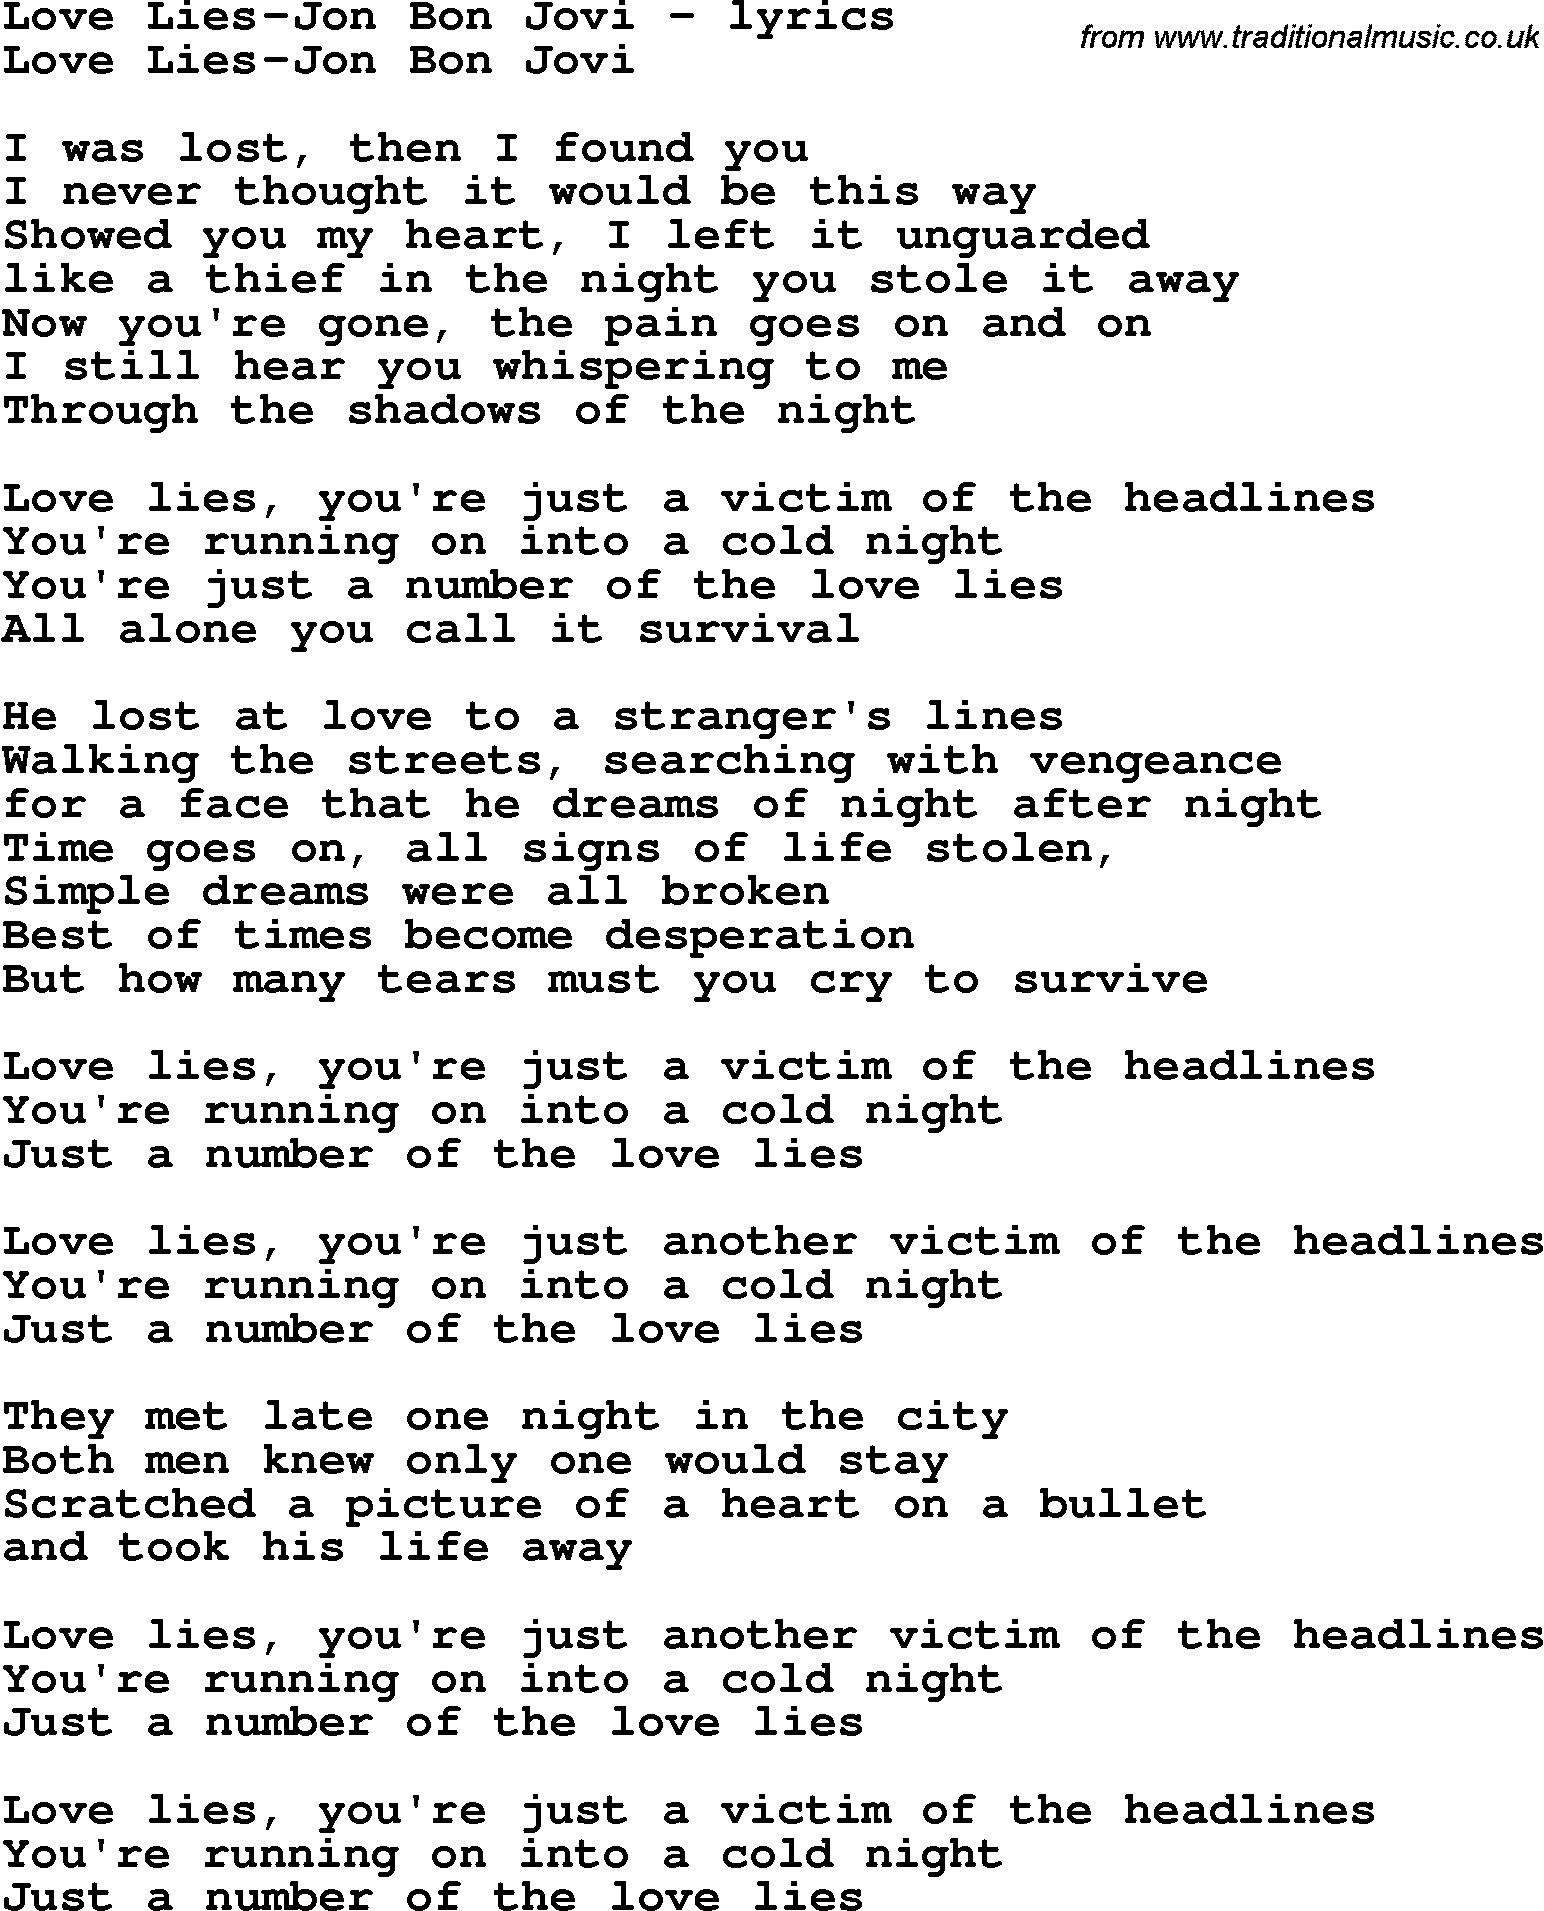 Love Song Lyrics for: Love Lies-Jon Bon Jovi